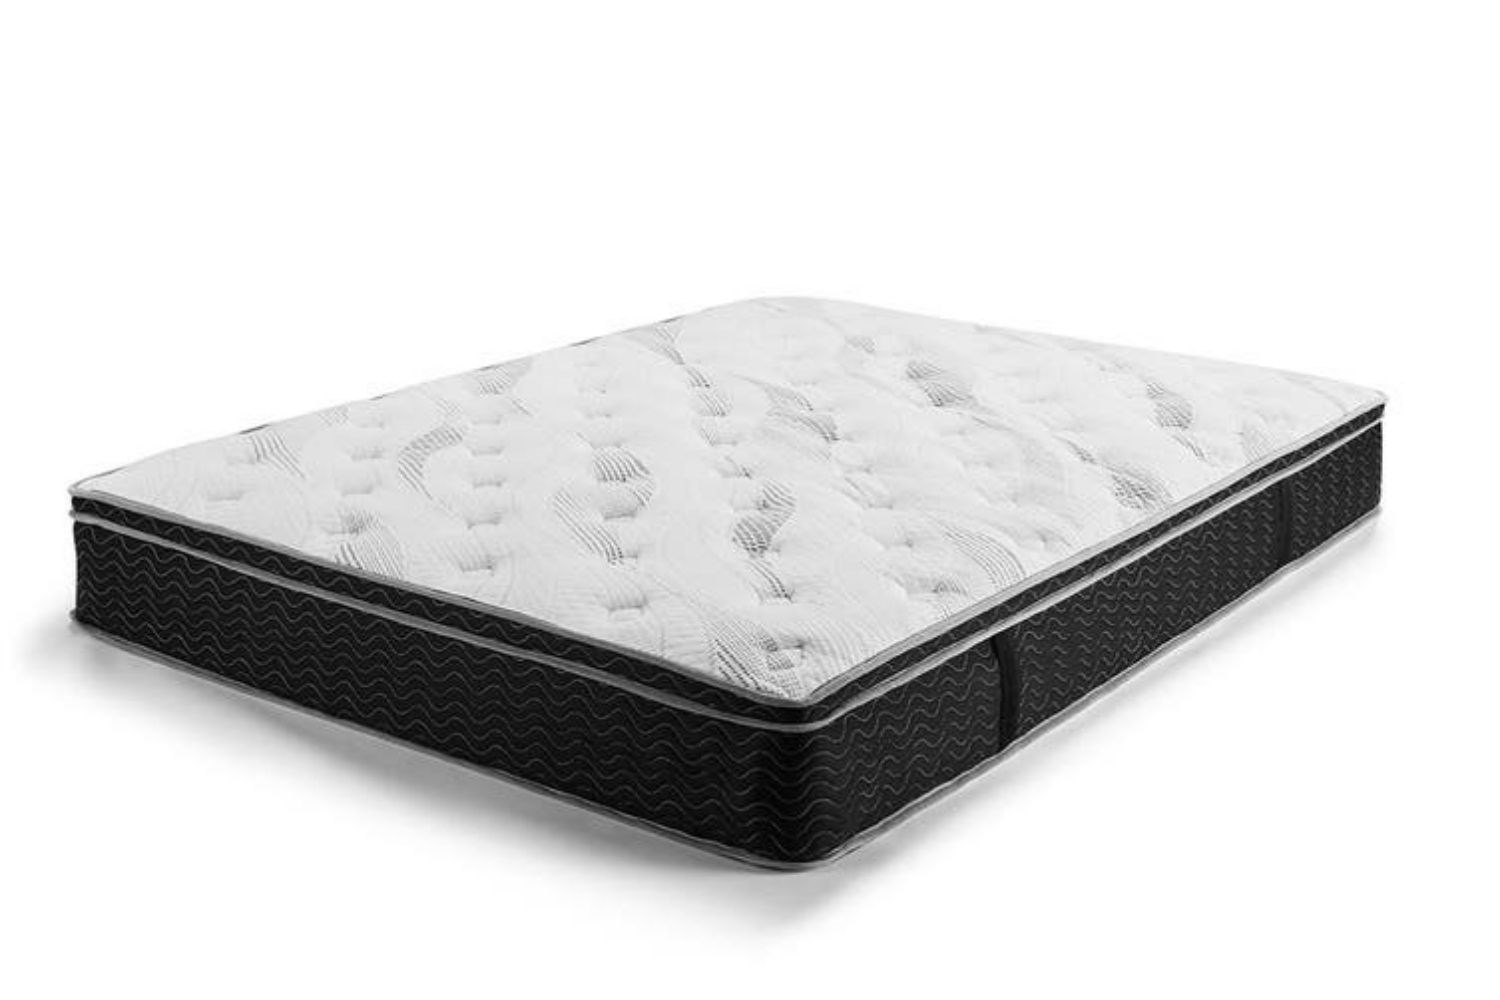 6-8 lb density gel memory foam mattress